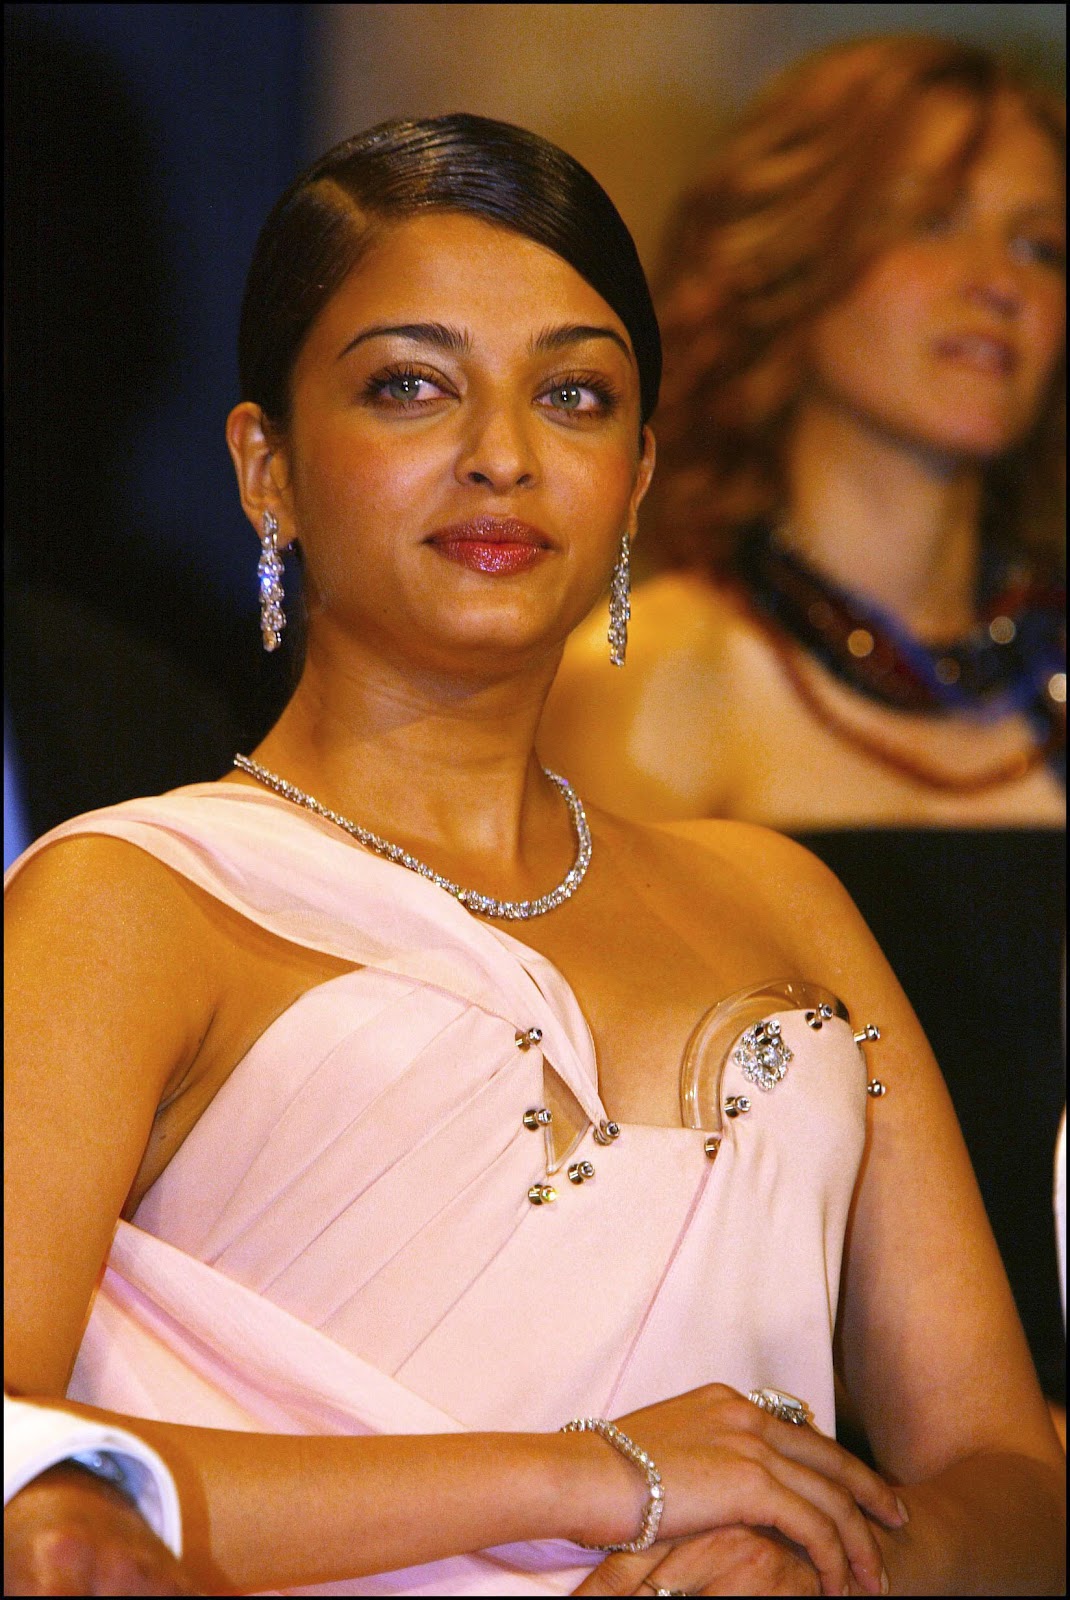 http://2.bp.blogspot.com/-_9w1IzoWeCk/T_prJP5NPbI/AAAAAAAAAuw/5QcTOr_xsQw/s1600/Aishwarya-Rai-Palm-Awards-Ceremony-Cannes-25-May-2003.jpg